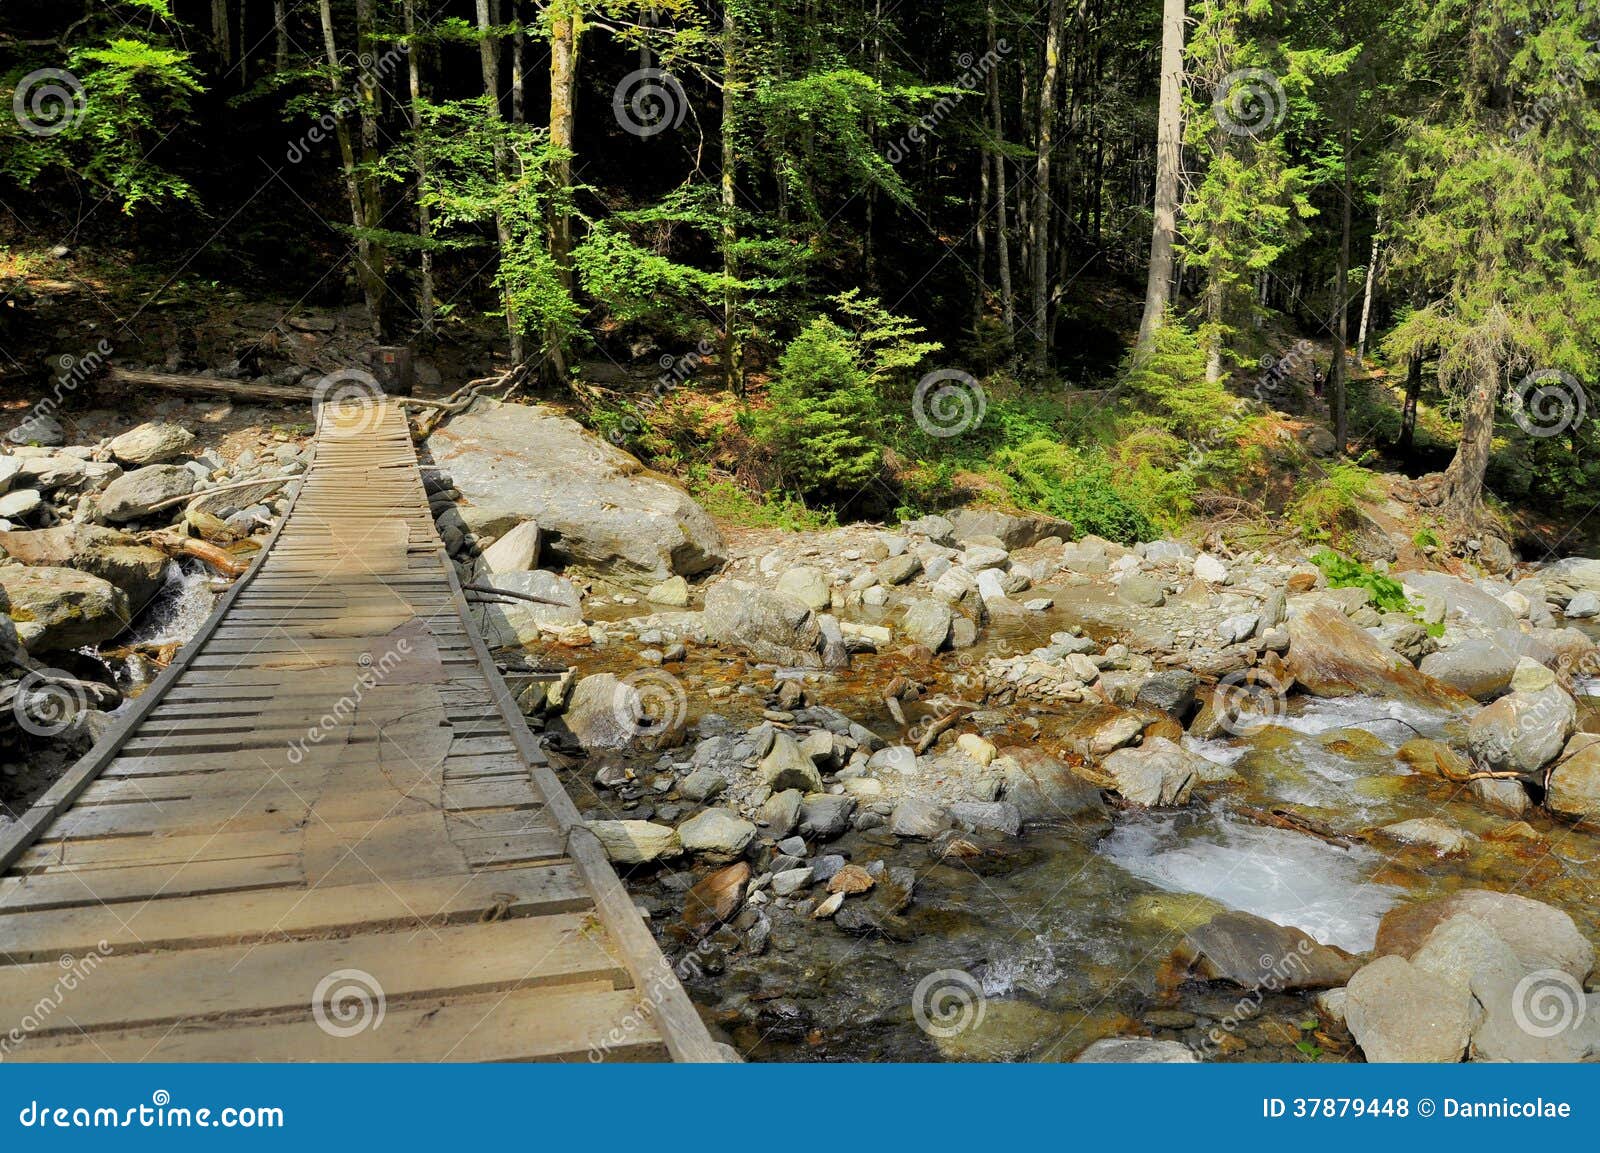 Rustic Wooden Bridge Over A Mountain Stream Royalty Free Stock Photos